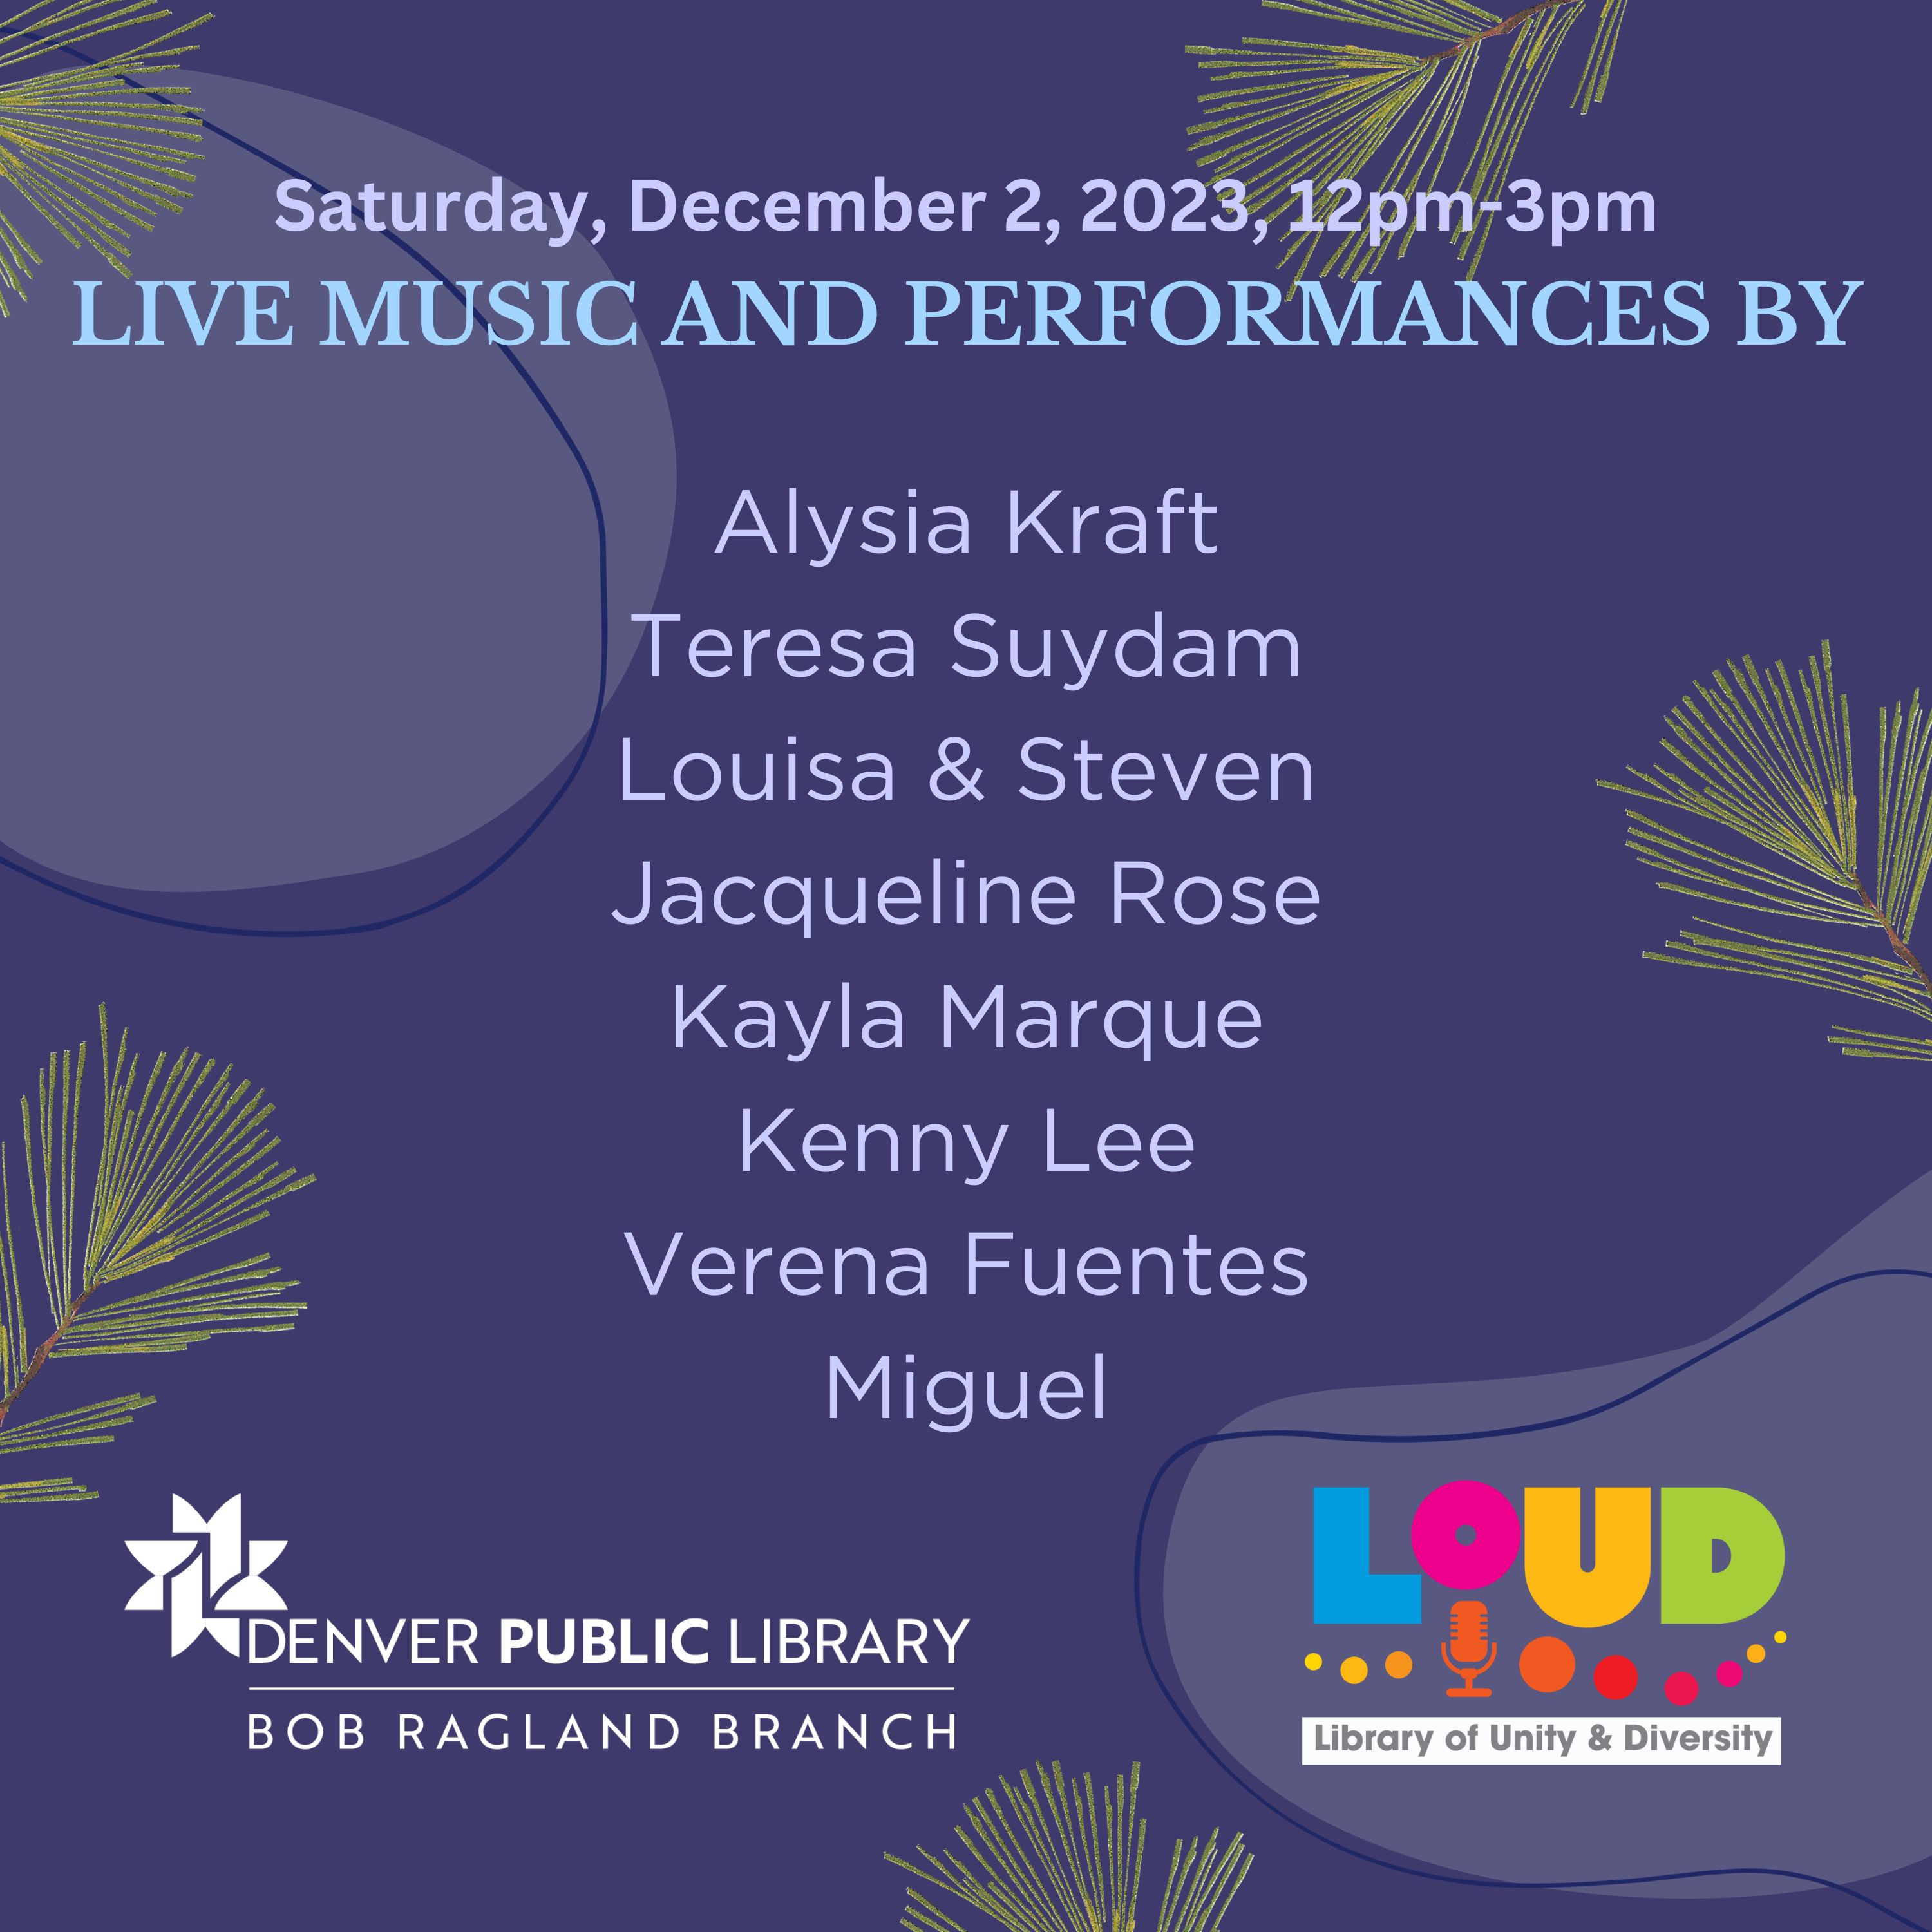 Loud event logo bob ragland logo december 2 at 12pm to 3 pm. names of performers: Alysia Kraft, Teresa Suydam, Louisa & Steve, Jacqueline Rose,  Kayla Marque, Kenny Lee, Verena Fuentes, Miguel